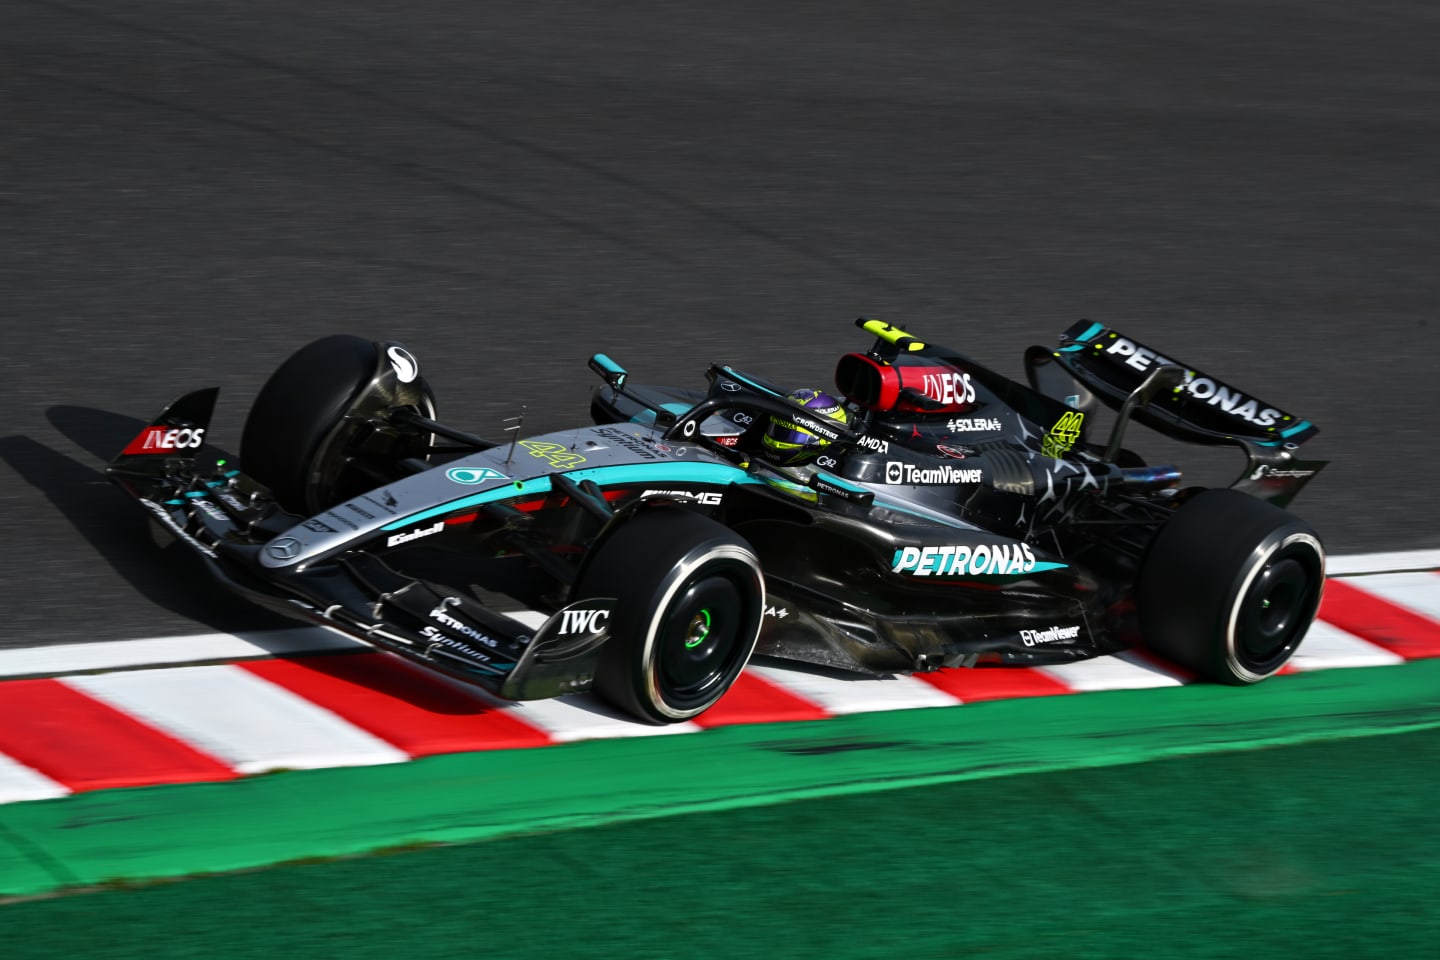 SUZUKA, JAPAN - APRIL 07: Lewis Hamilton of Great Britain driving the (44) Mercedes AMG Petronas F1